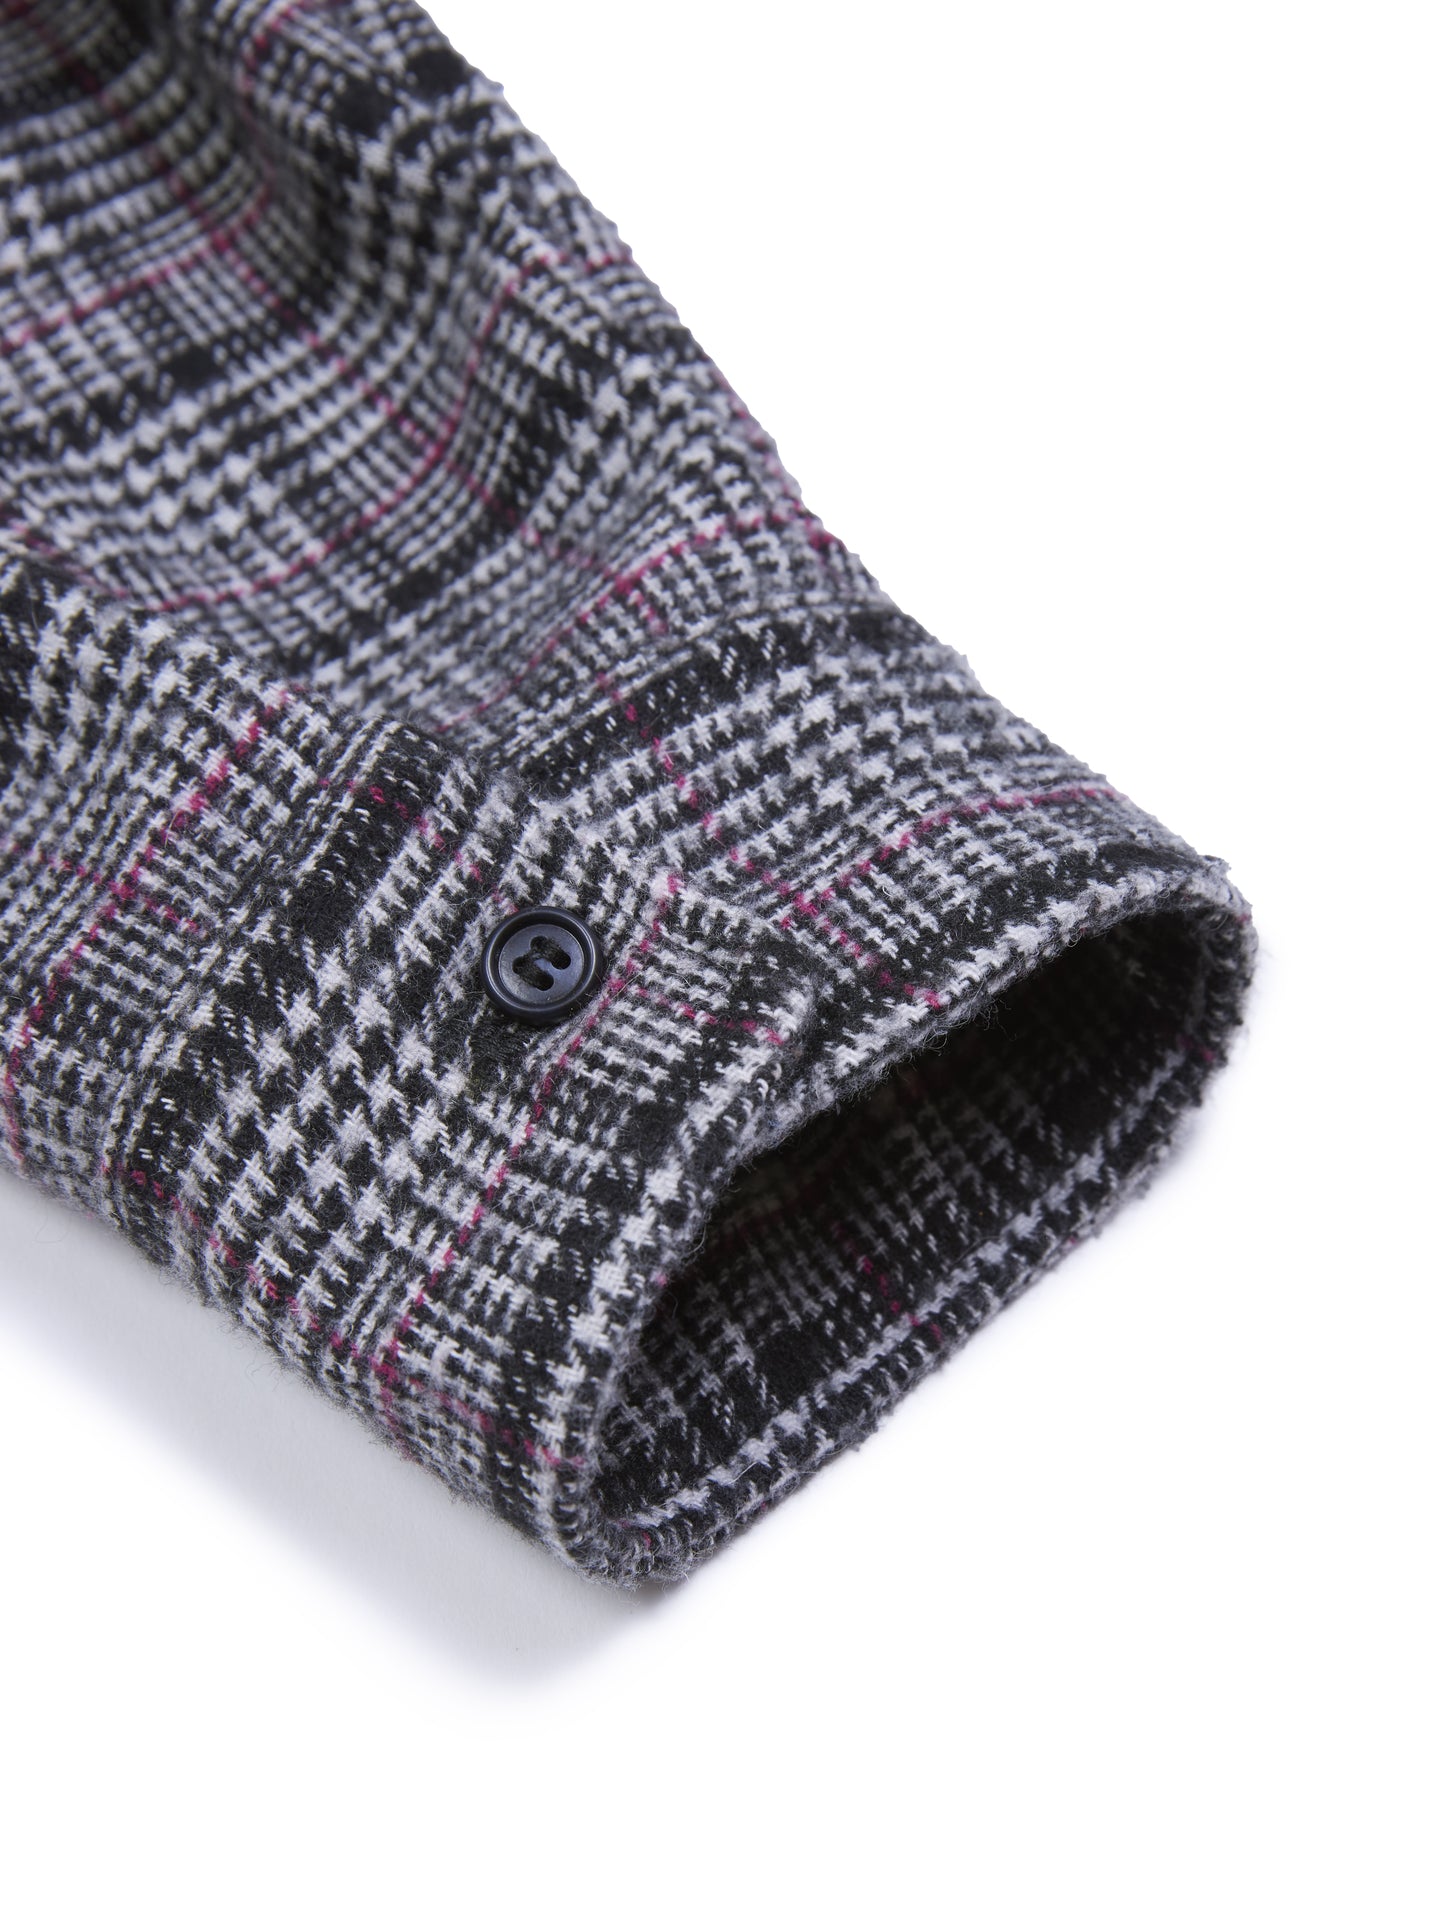 LITTLE AFRICA "Tweed Flannel" (Grey/Black/Honeysuckle)